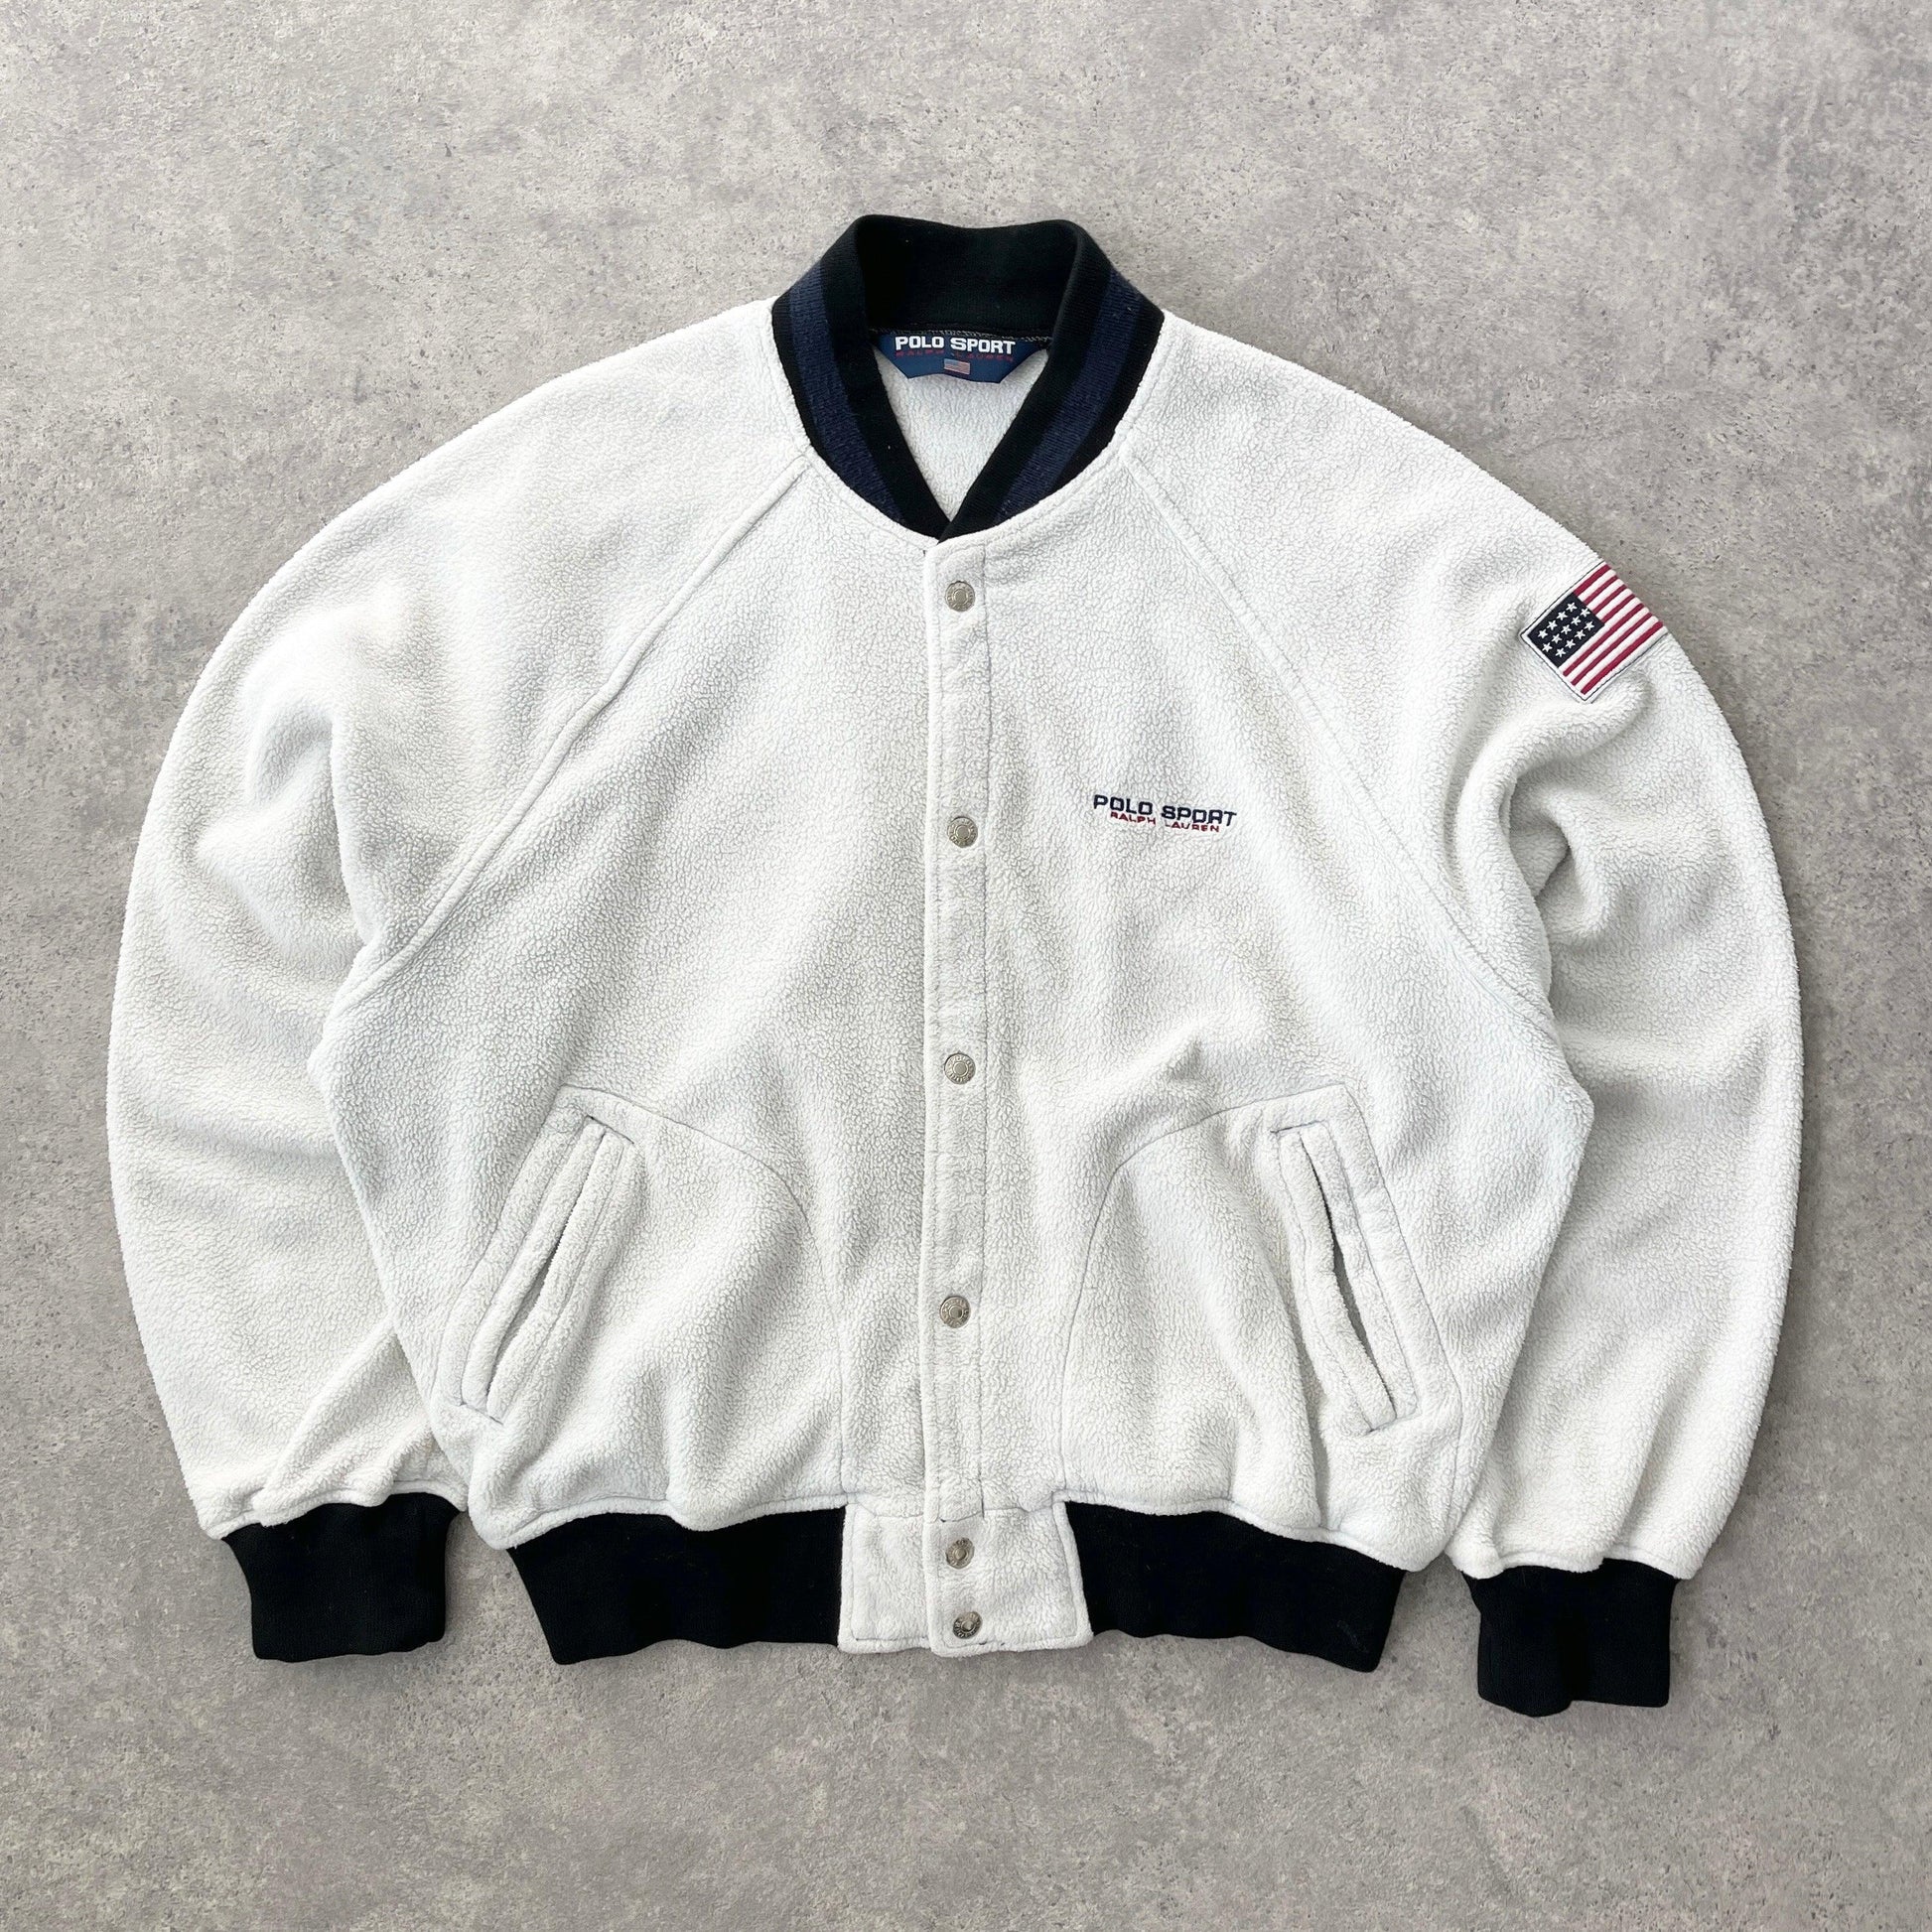 Polo Sport Ralph Lauren 1990s heavyweight fleece bomber jacket (L) - Known Source